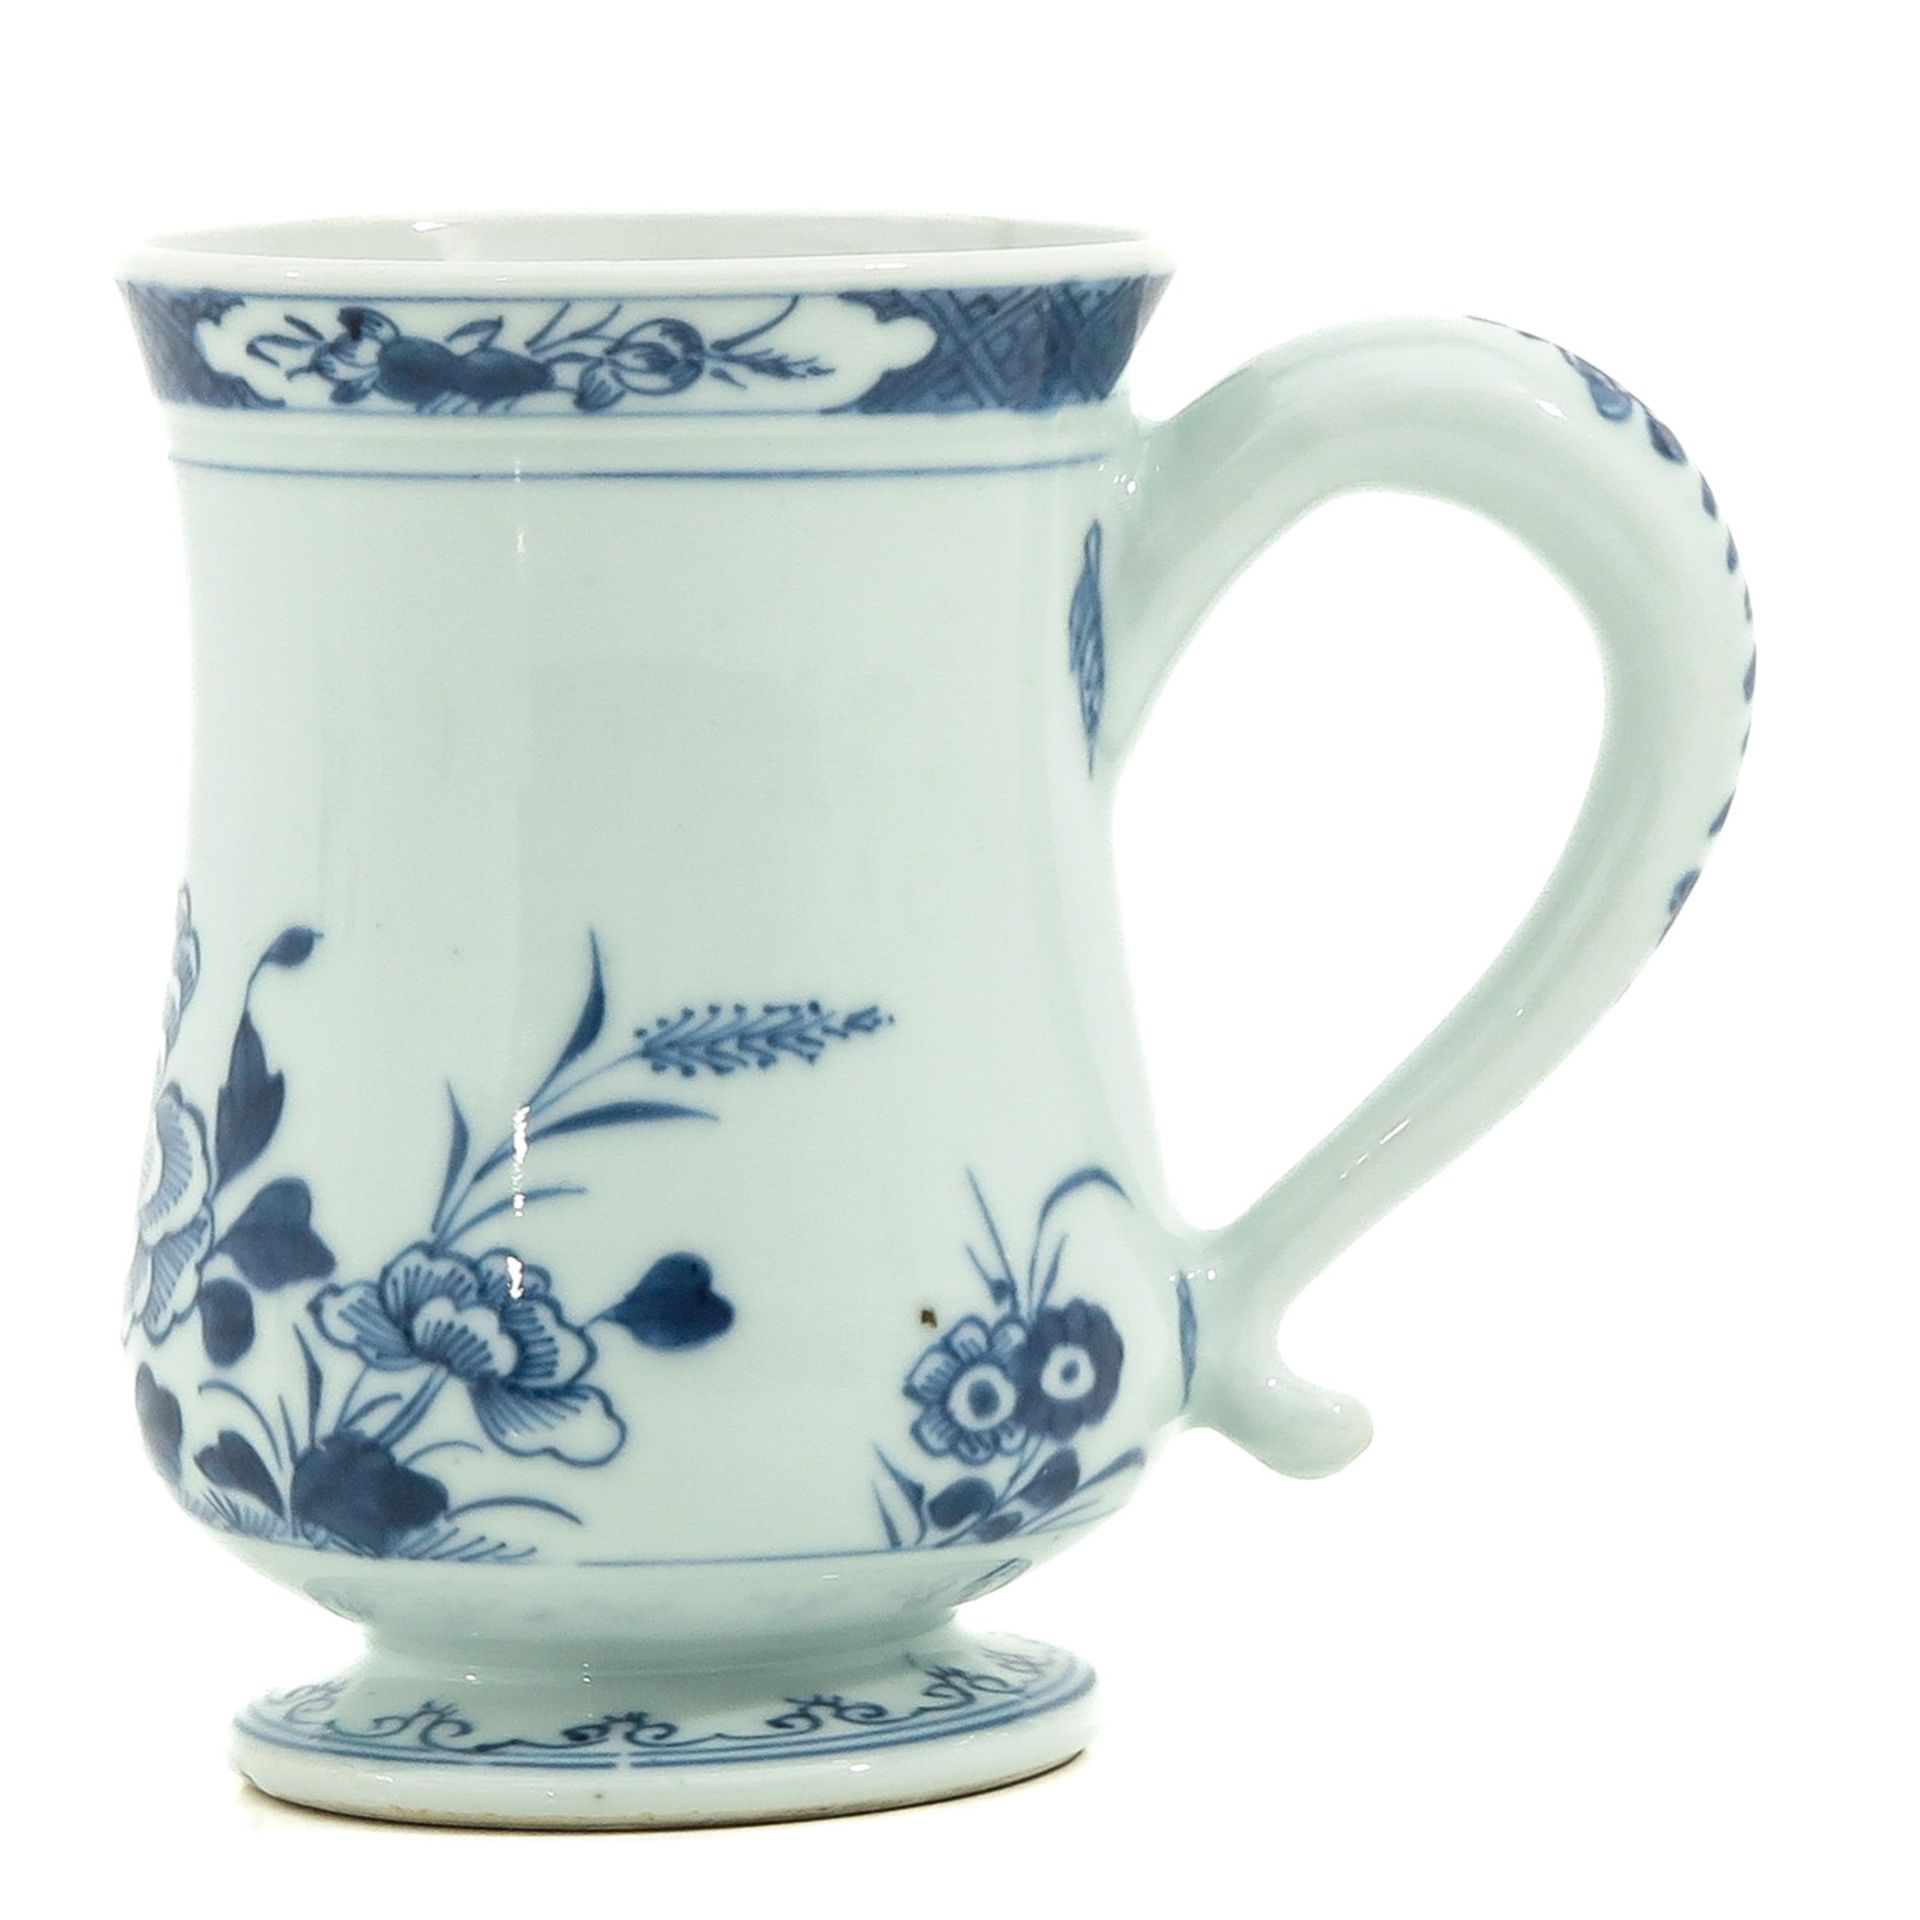 A Blue and White Mug